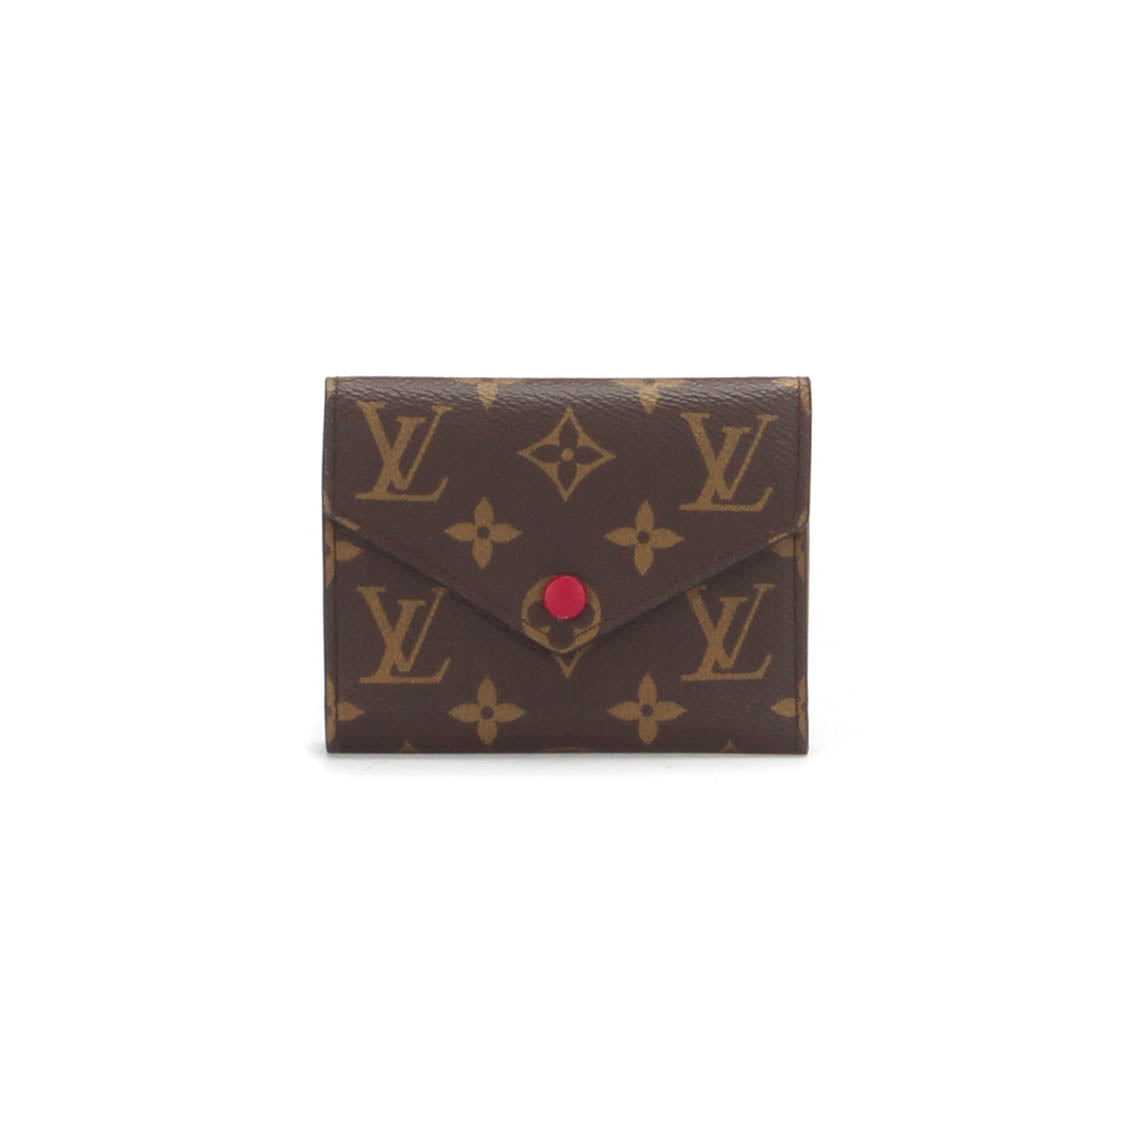 Shop Louis Vuitton MONOGRAM Victorine wallet (M41938) by yutamum